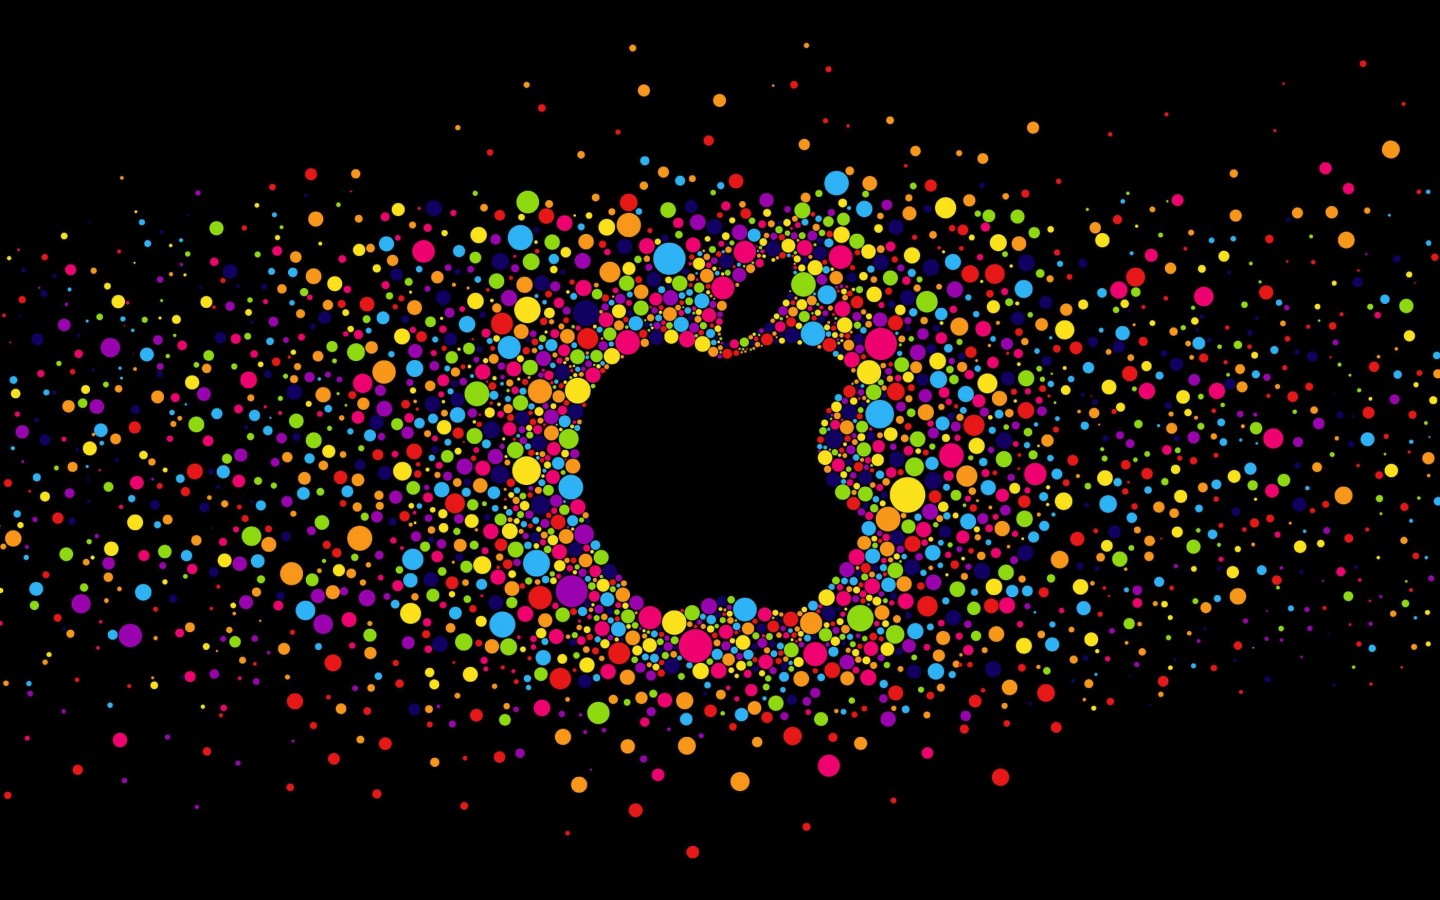 Black Apple Logo Particles Wallpaper for Desktop 1440x900